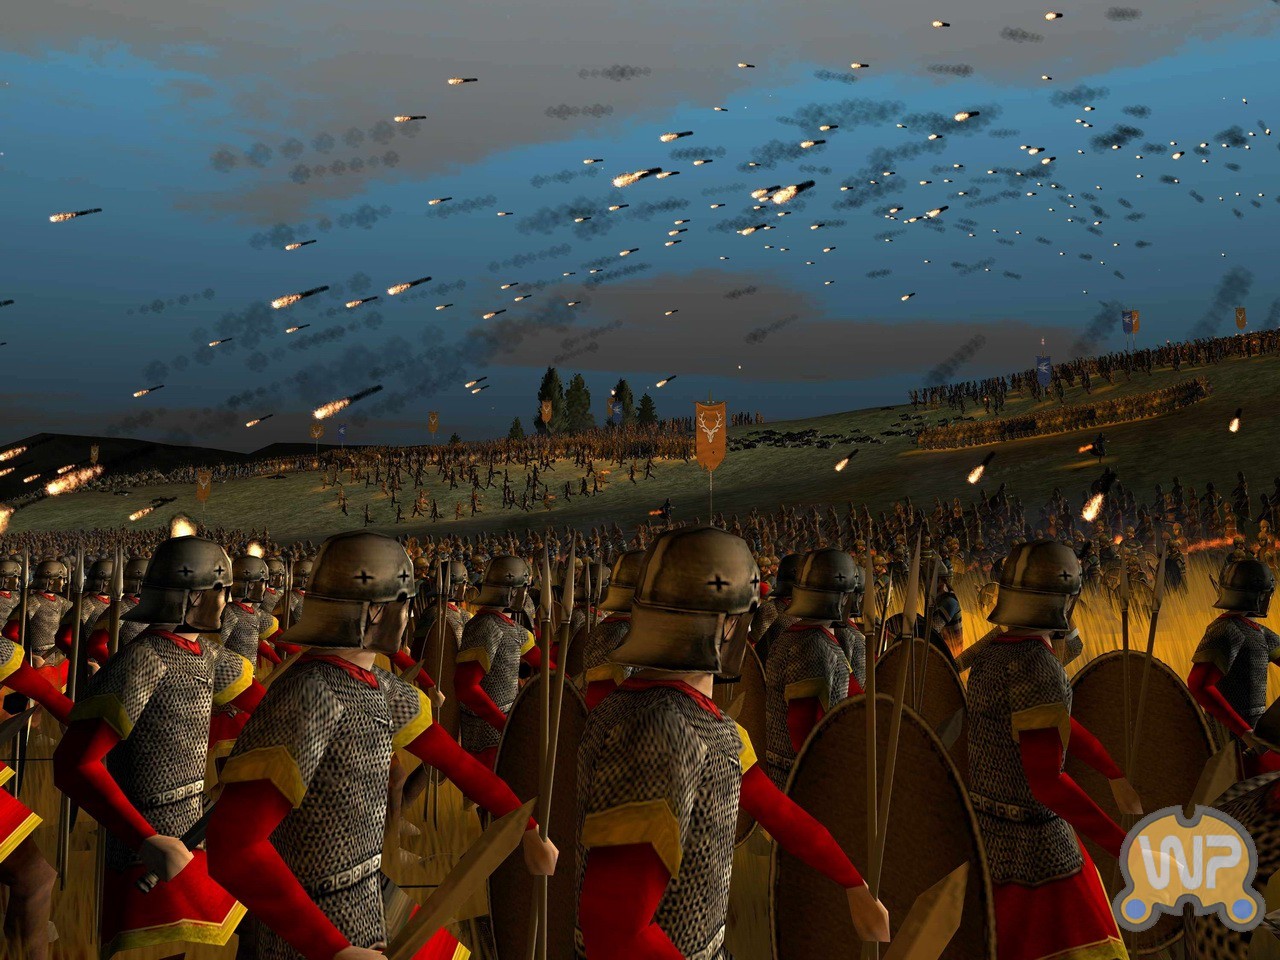 Rapidshare Rome Total War Gold